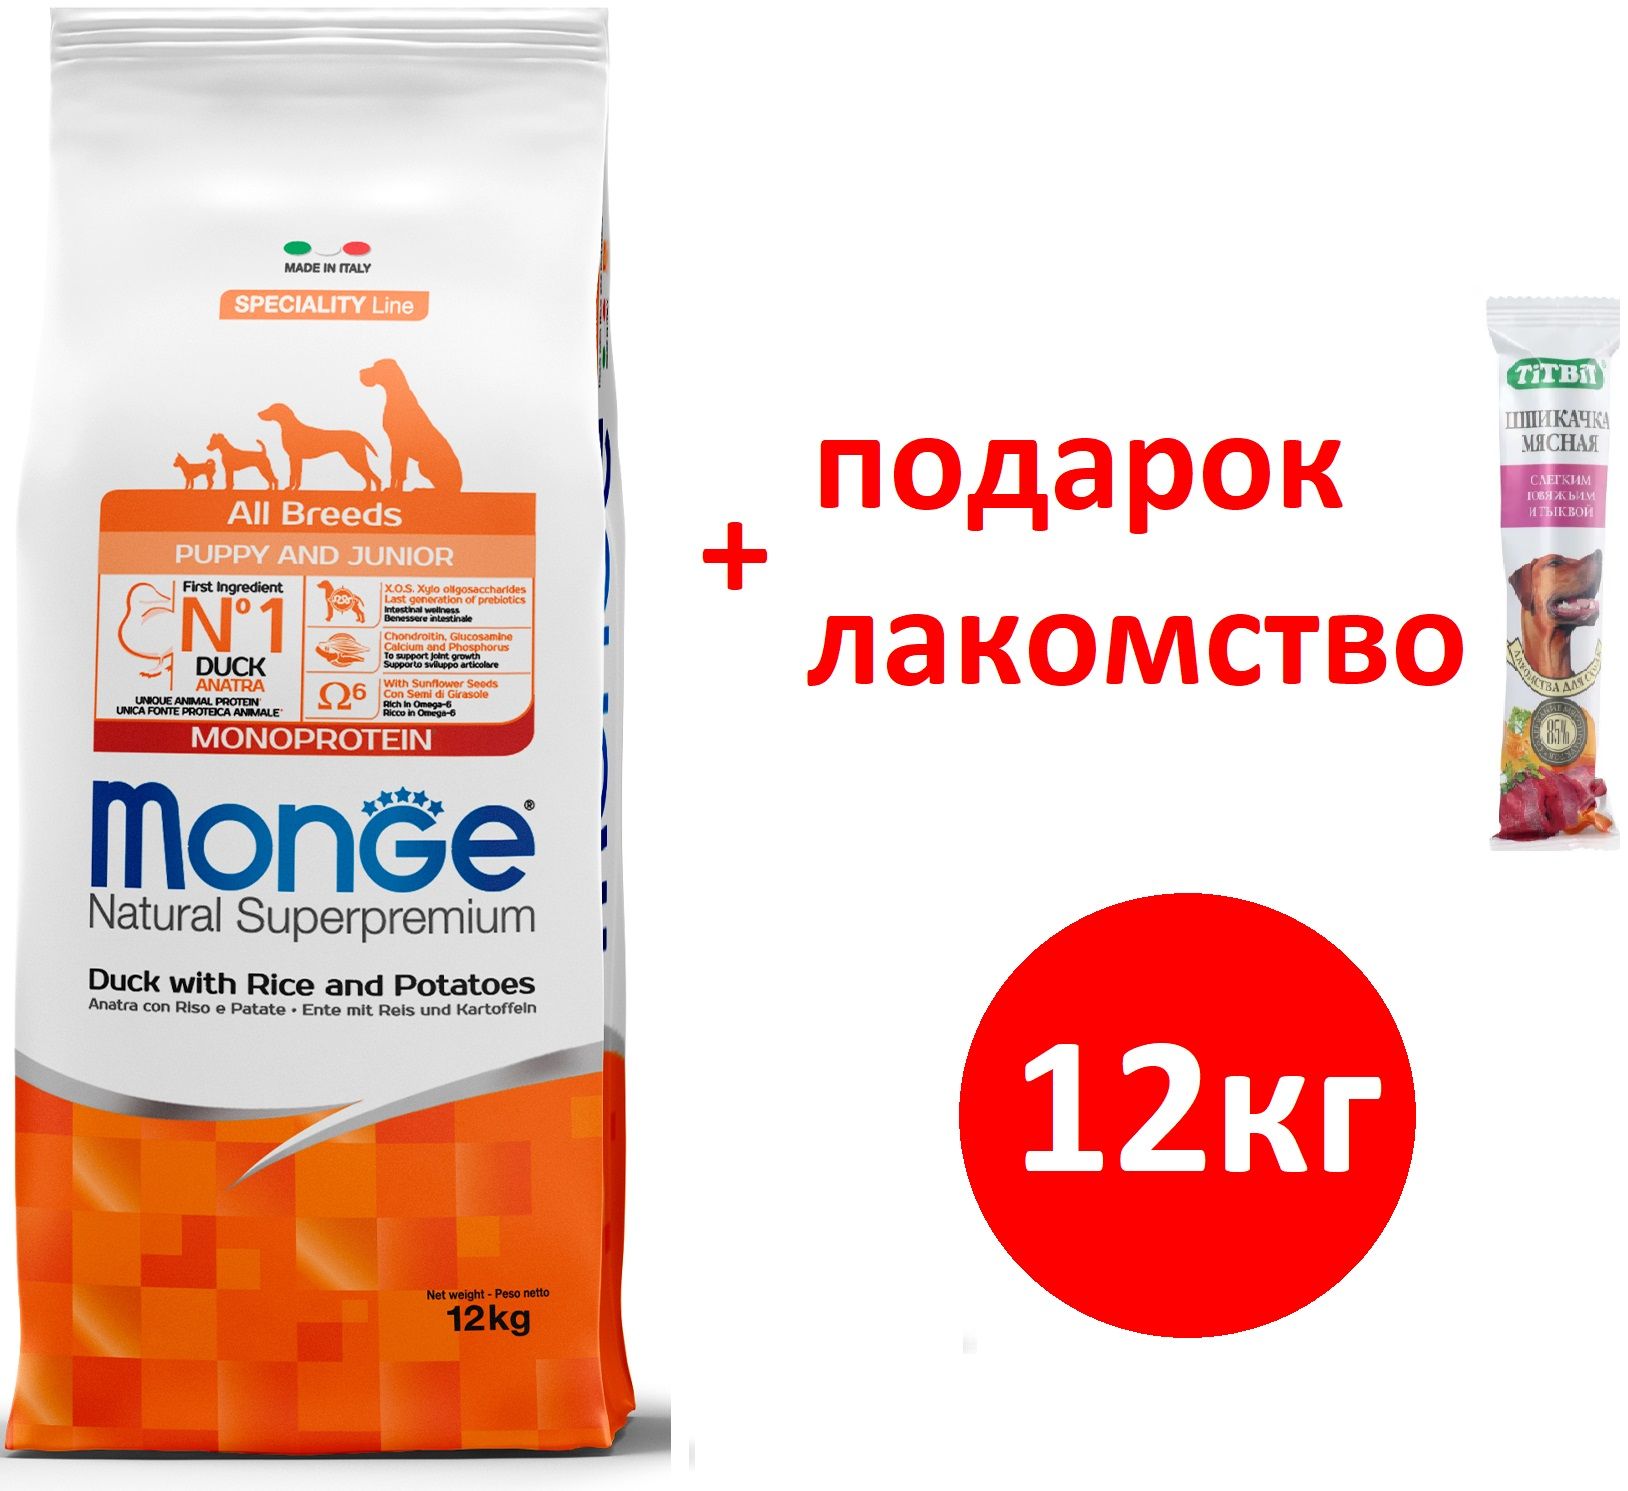 Monge 12 кг. Сухой корм Monge Dog Speciality line Monoprotein Puppy&Junior. Monge all Breeds Adult Speciality line, 15 кг. Monge Speciality line логотип корма. Корм Монж 12 кг.